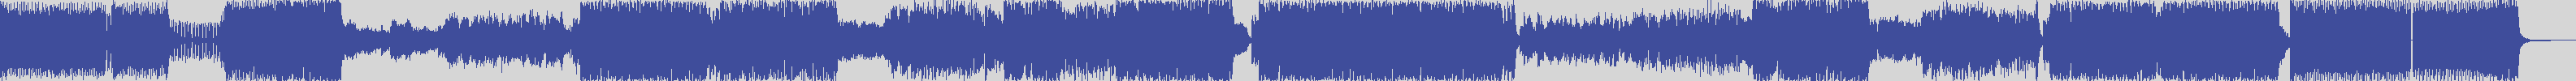 definitiva [DEF010] Wem-j. - La Rondine [DJ Cutry Power Mix] audio wave form